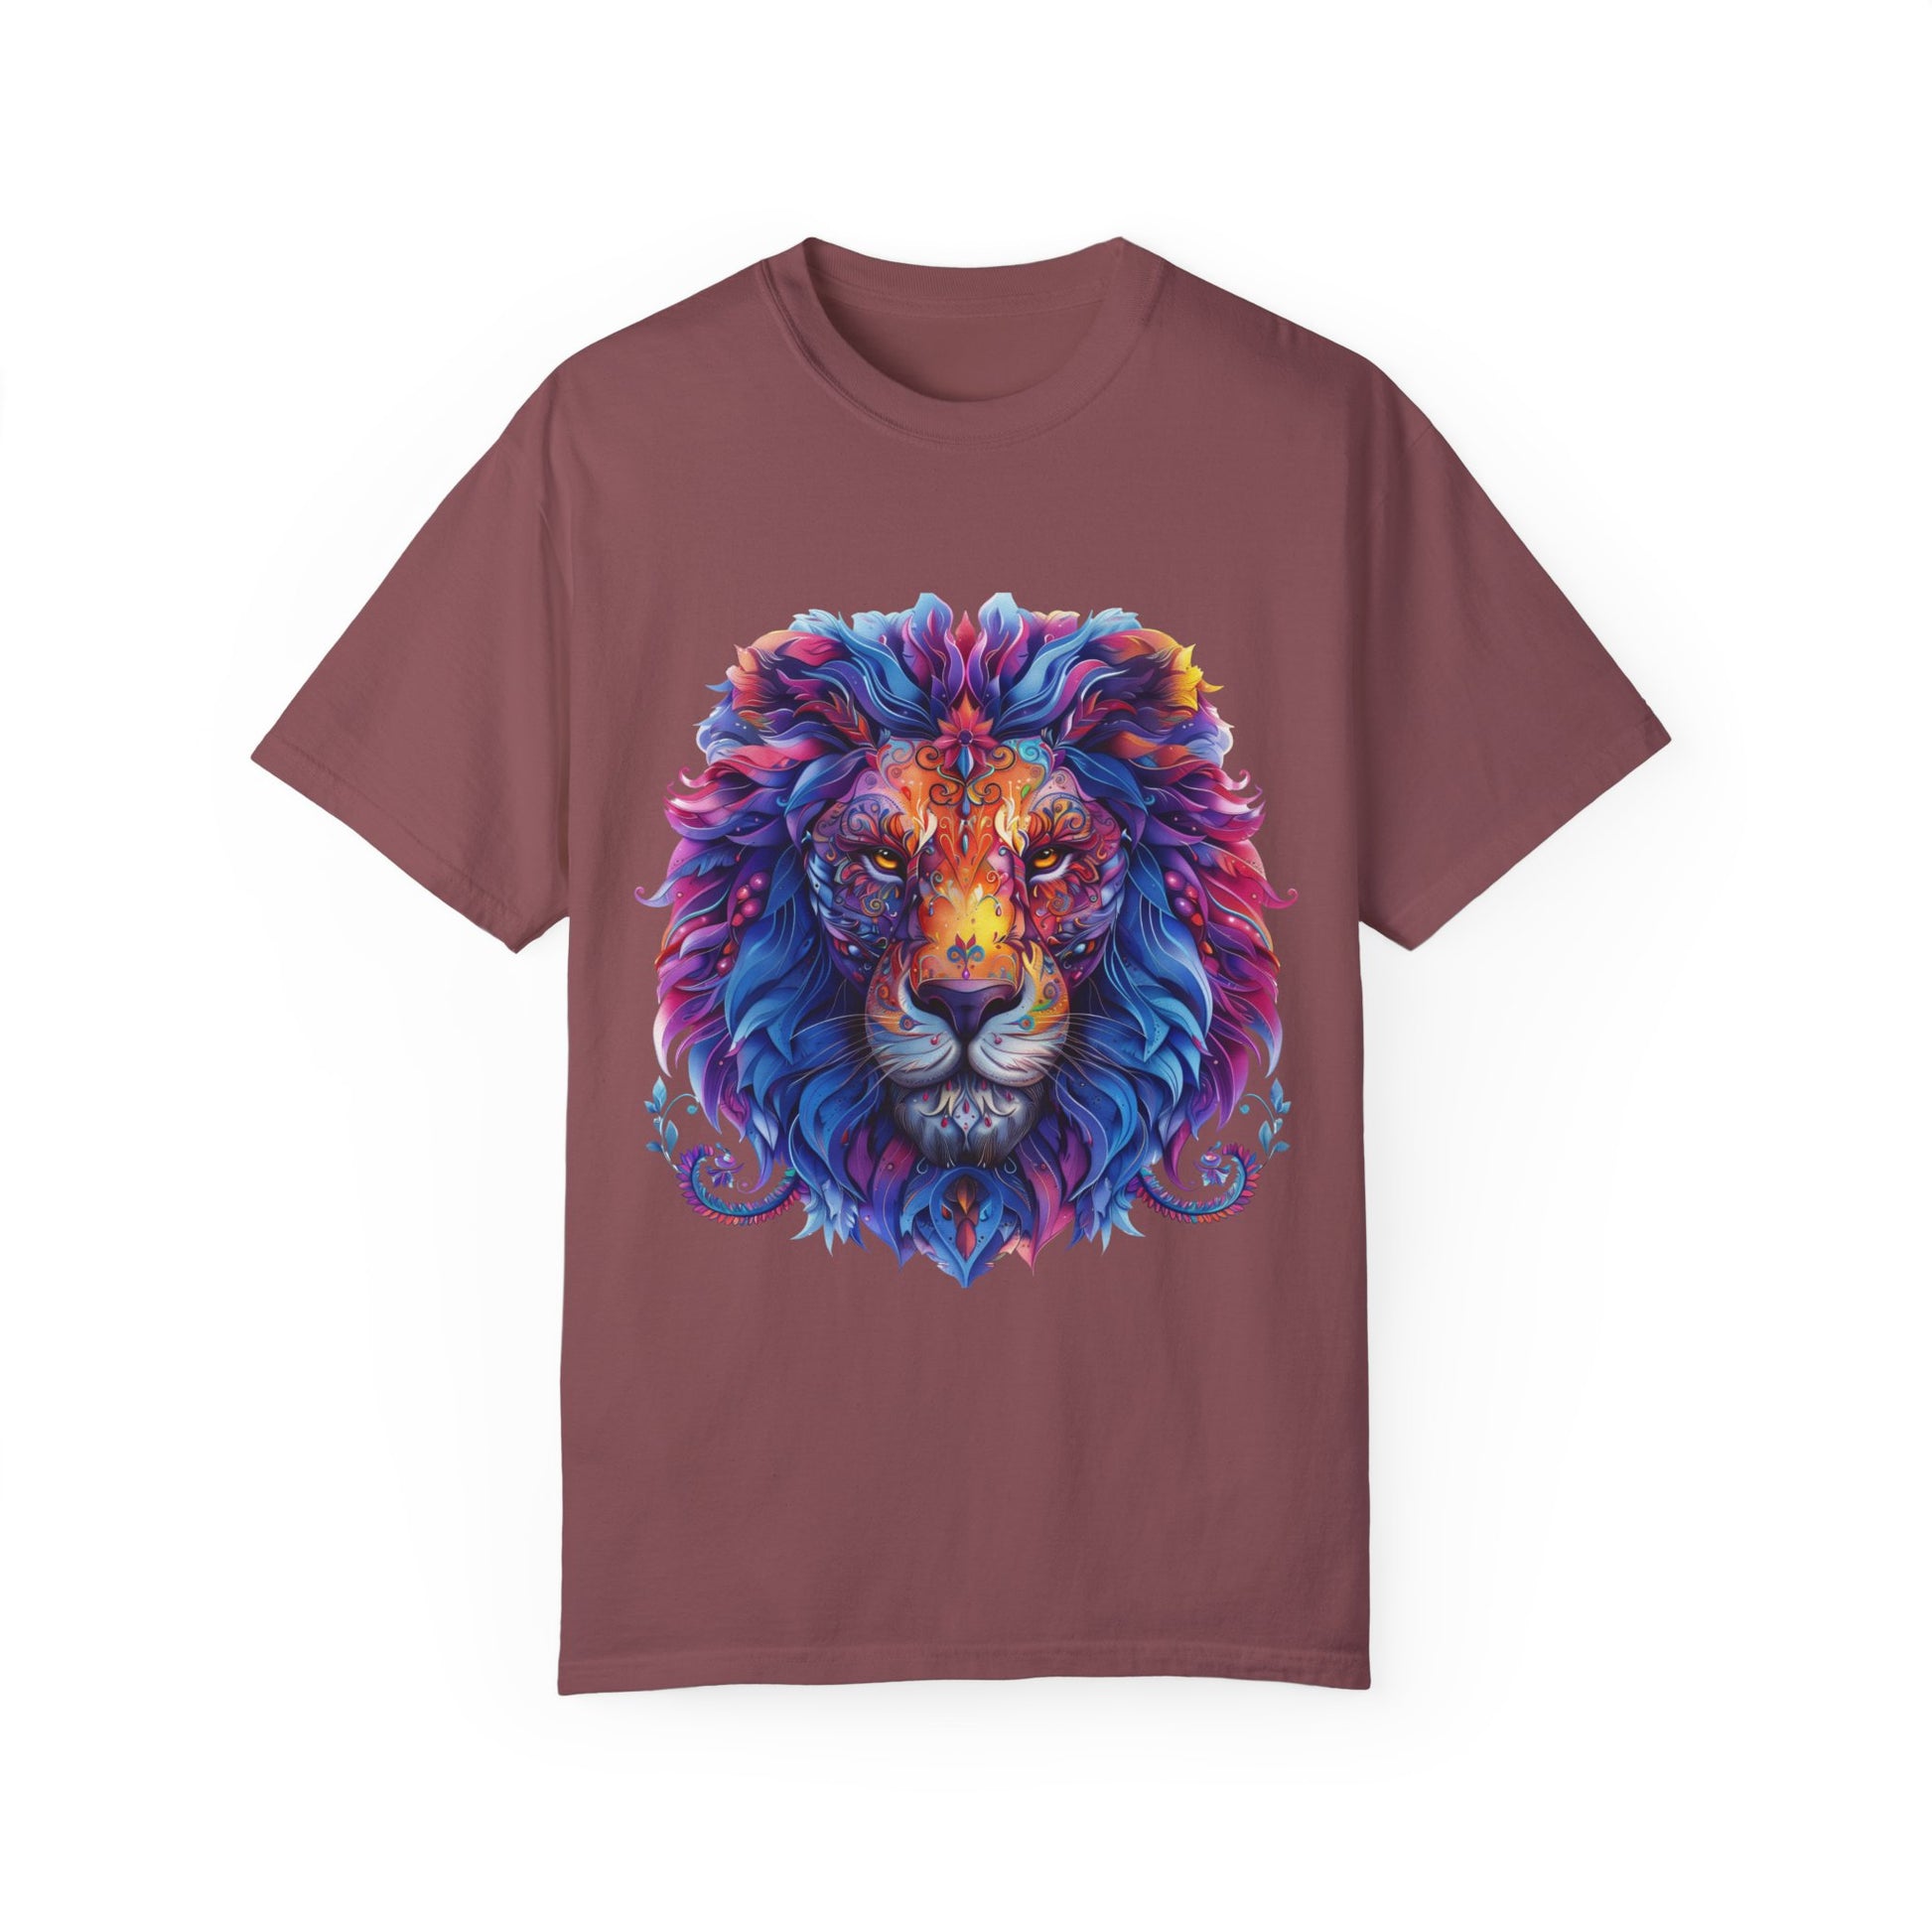 Lion Head Cool Graphic Design Novelty Unisex Garment-dyed T-shirt Cotton Funny Humorous Graphic Soft Premium Unisex Men Women Brick T-shirt Birthday Gift-5